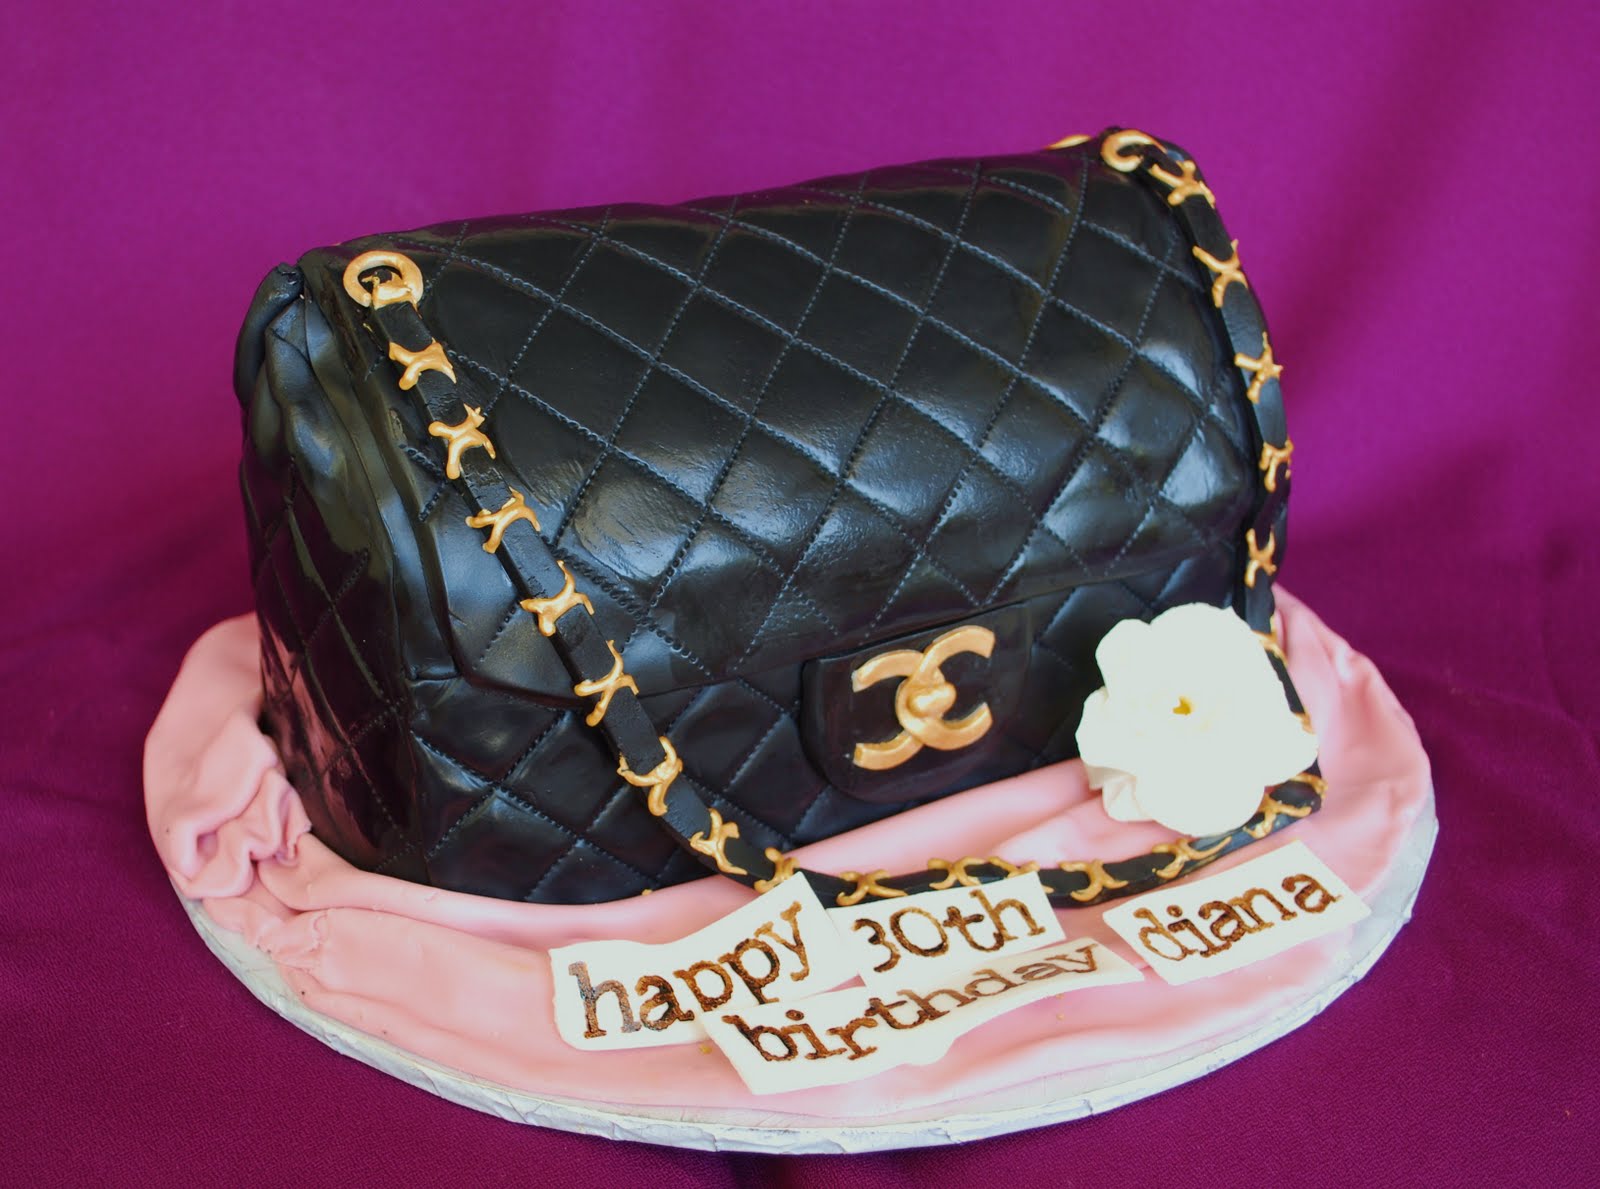 The Beehive Designer Handbag Cake